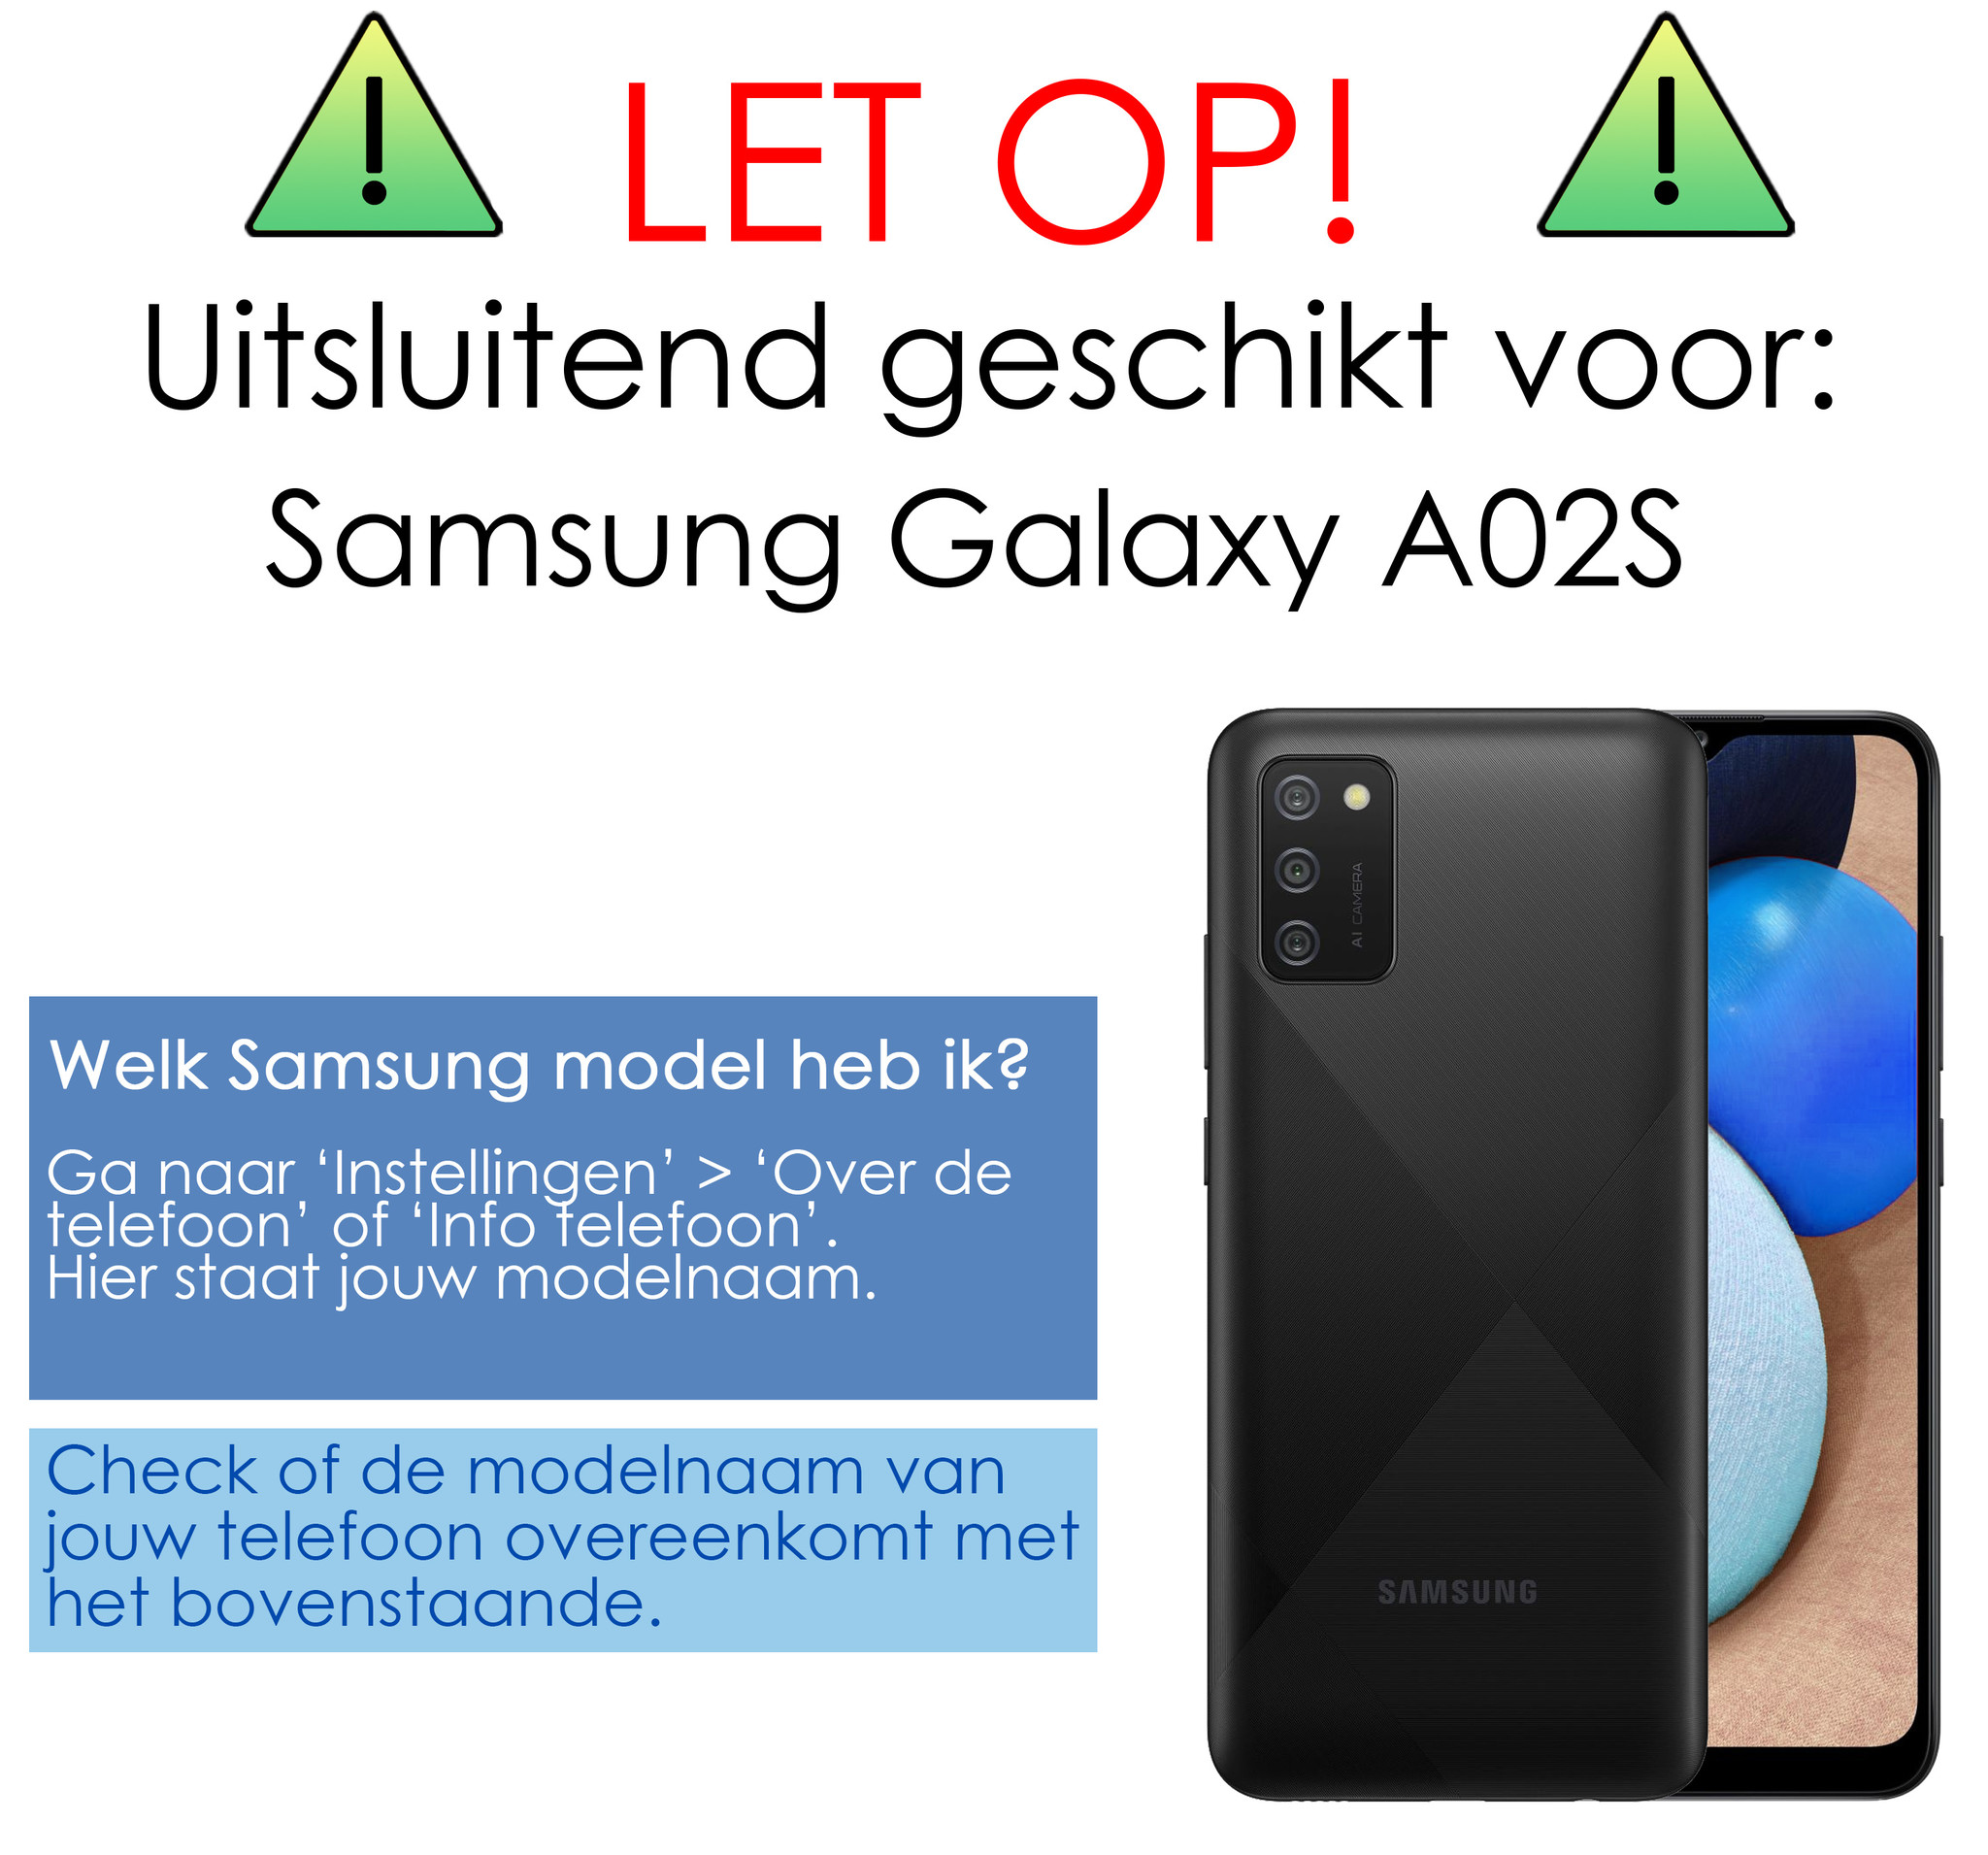 NoXx Hoes Geschikt voor Samsung A02s Hoesje Book Case Hoes Flip Cover Wallet Bookcase - Turquoise